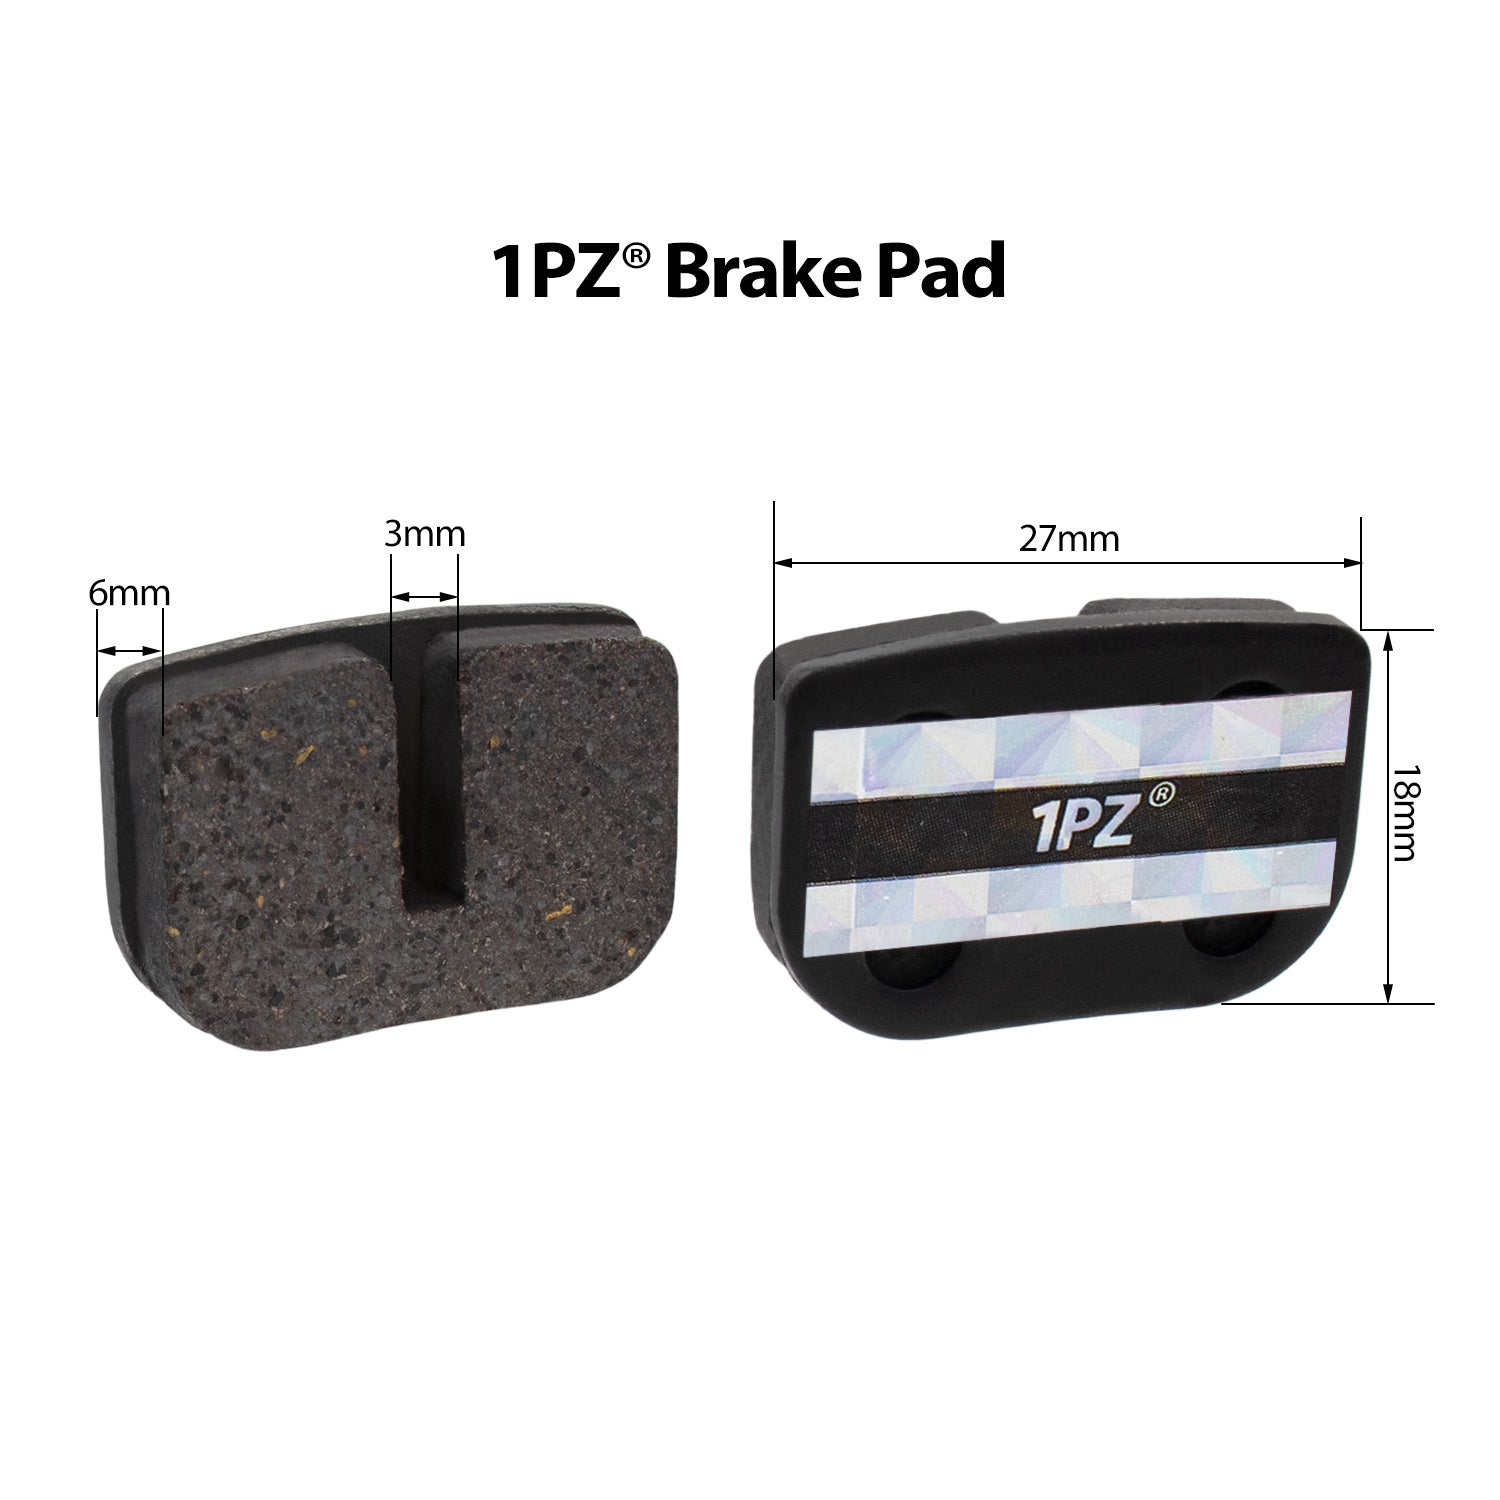 1PZ Brake Pads for MOTOVOX MBX10 79CC MINI BIKE REAR BRAKE PADS MBX-10 PARTS NEW (2 Pack)